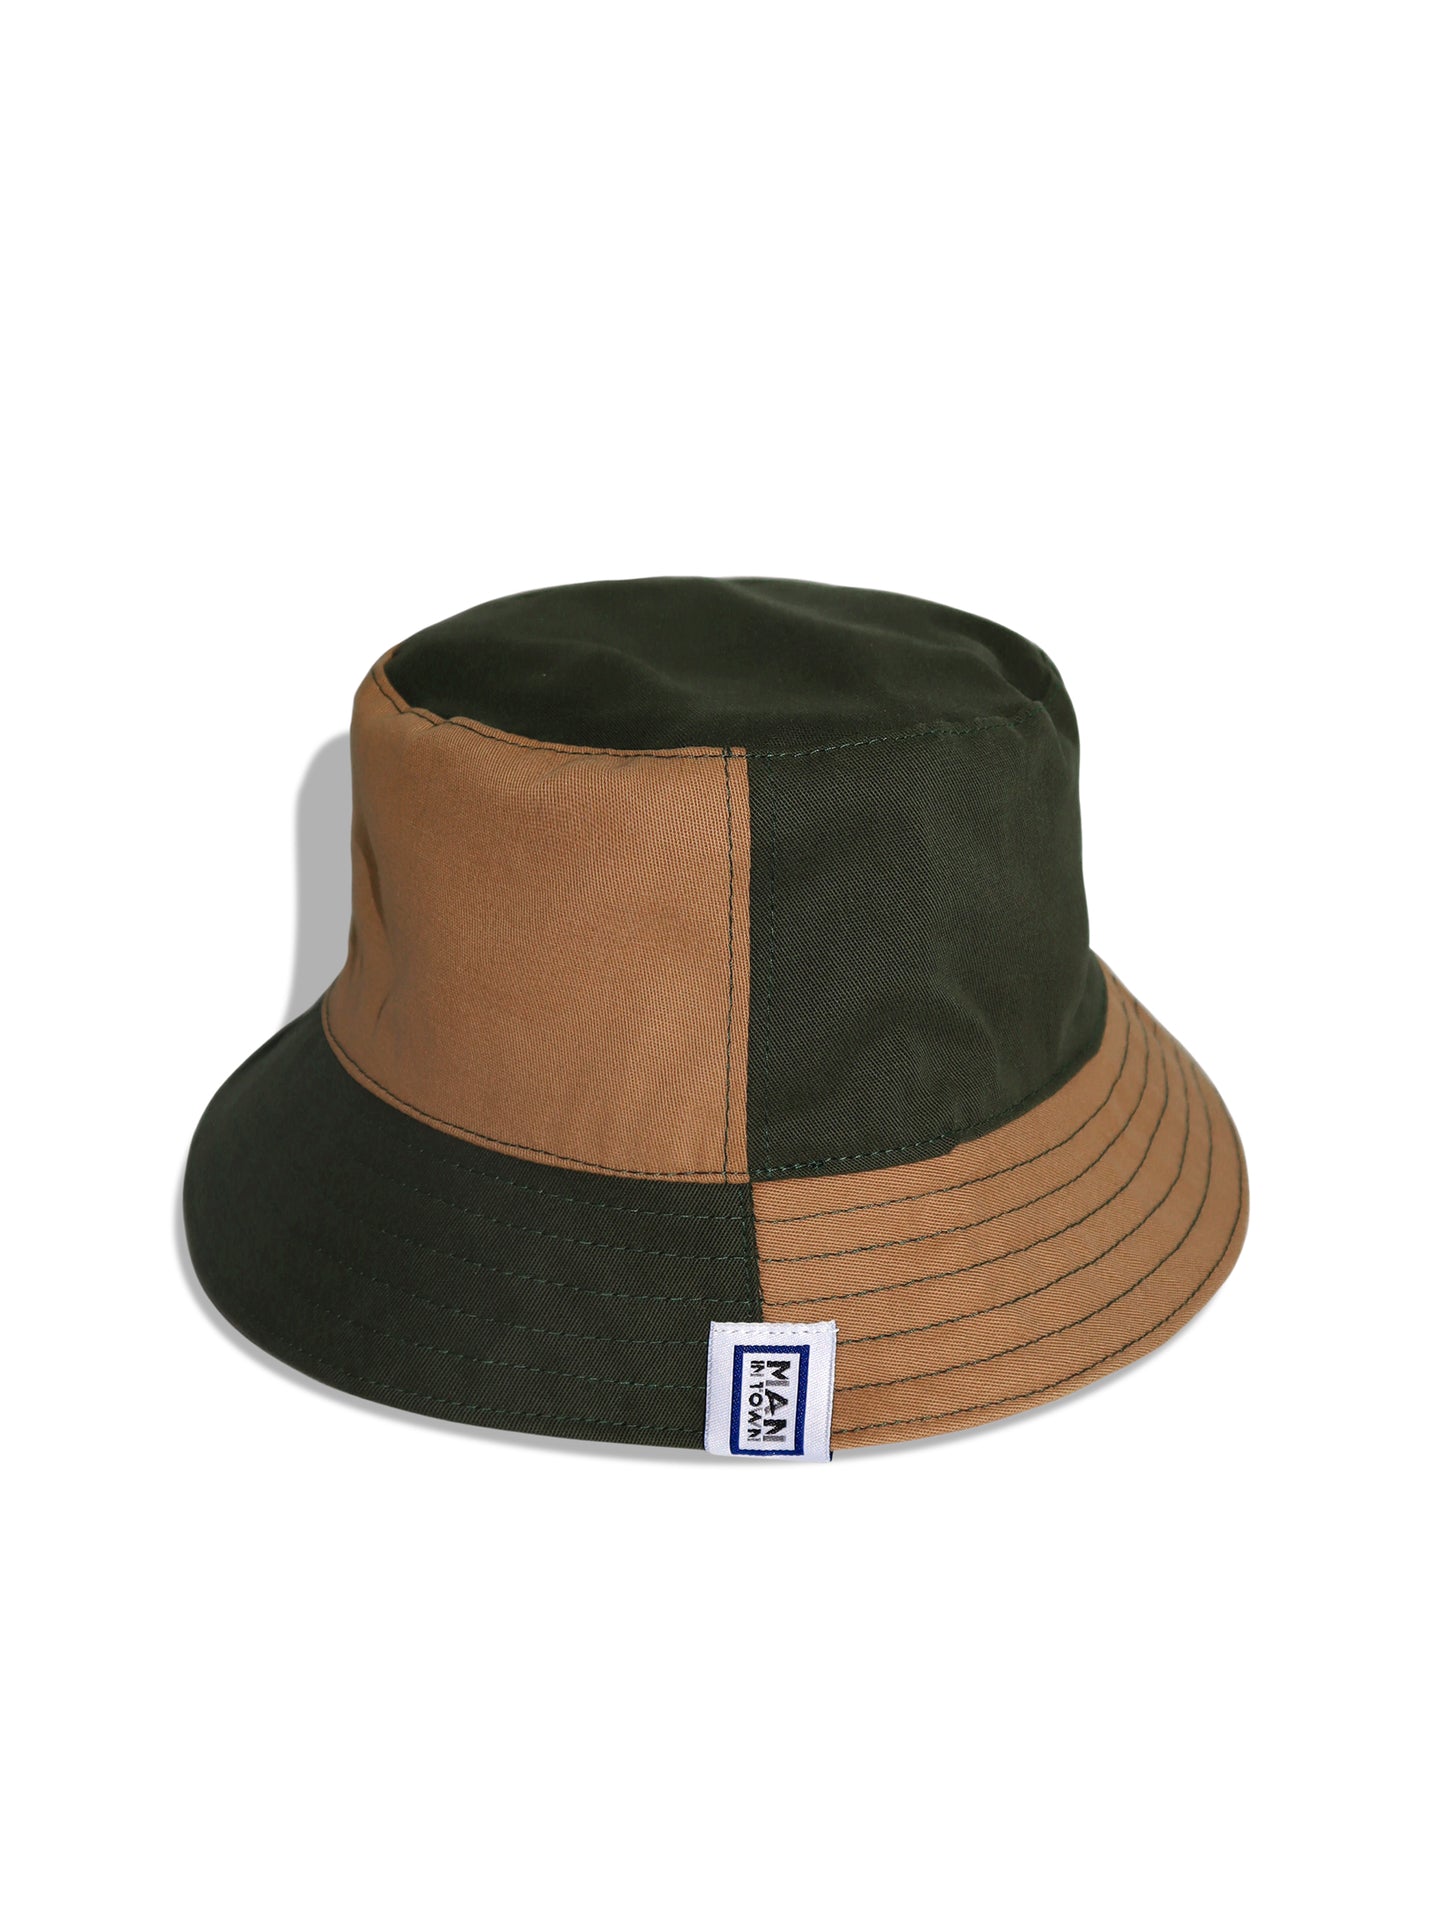 Reversible Bucket Hat - Beige/Khaki